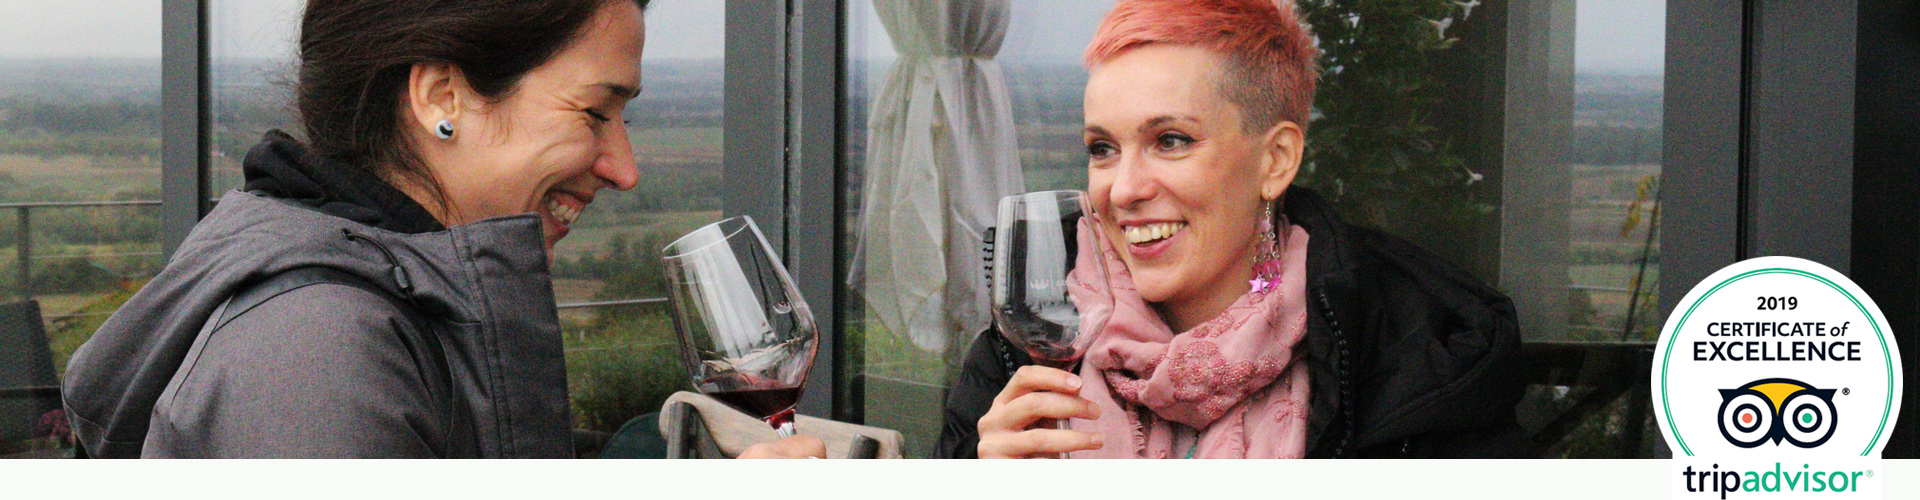 Two girls enjoy tasting wine on wine tour.